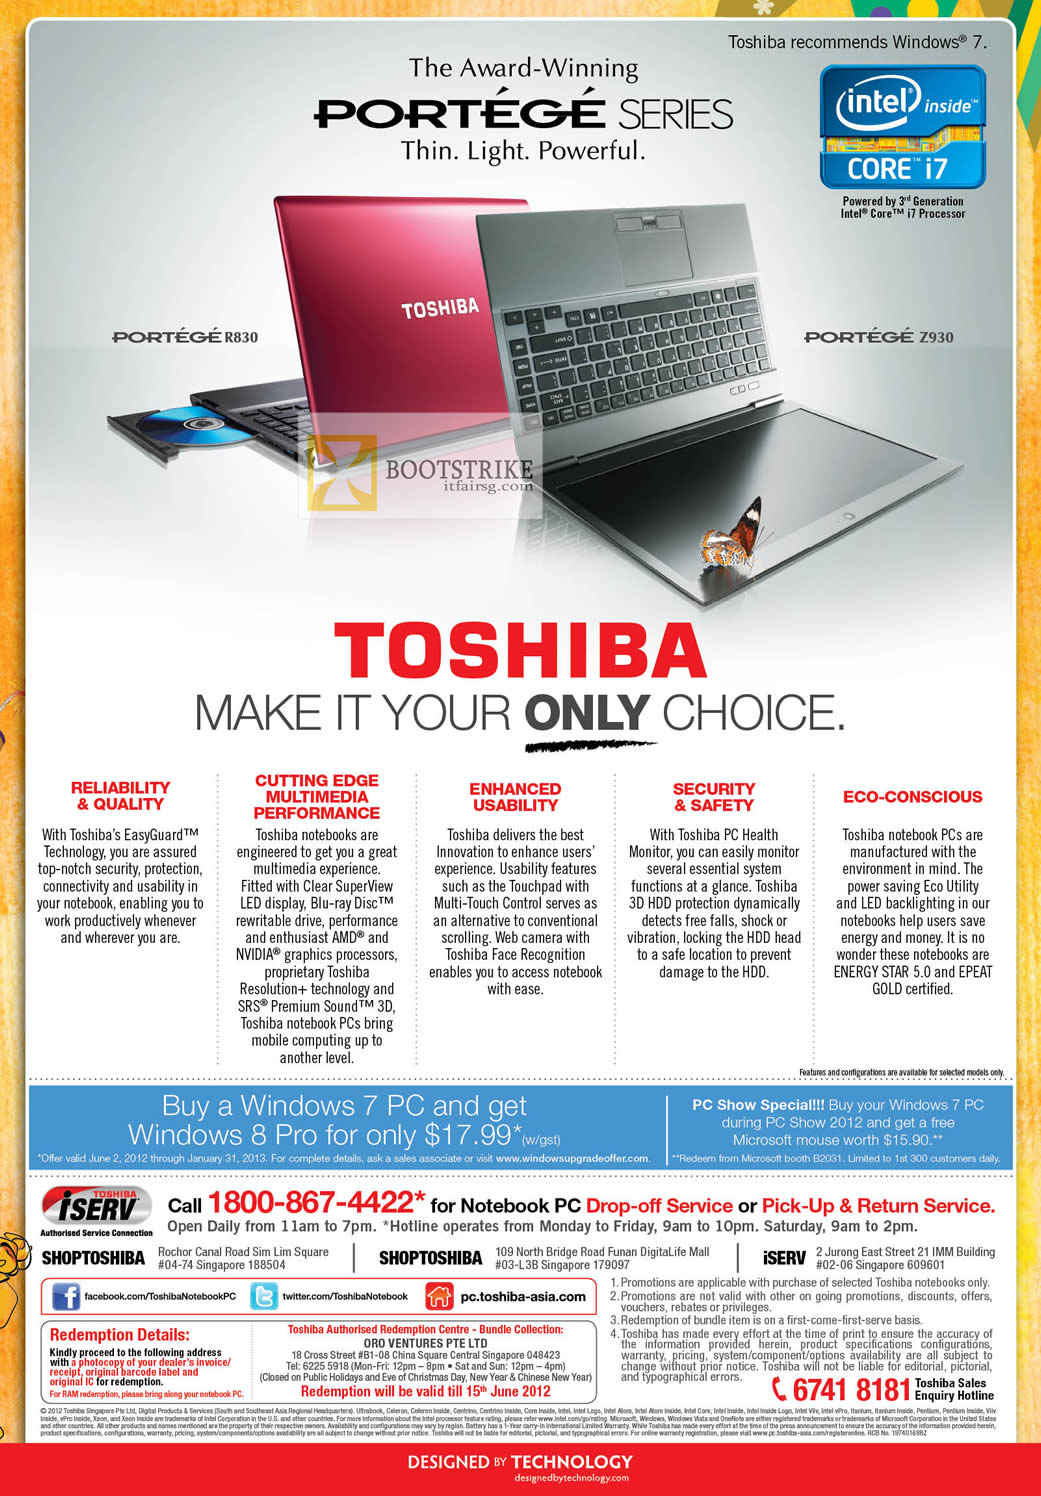 PC SHOW 2012 price list image brochure of Toshiba Notebooks Portege Features, Windows 8